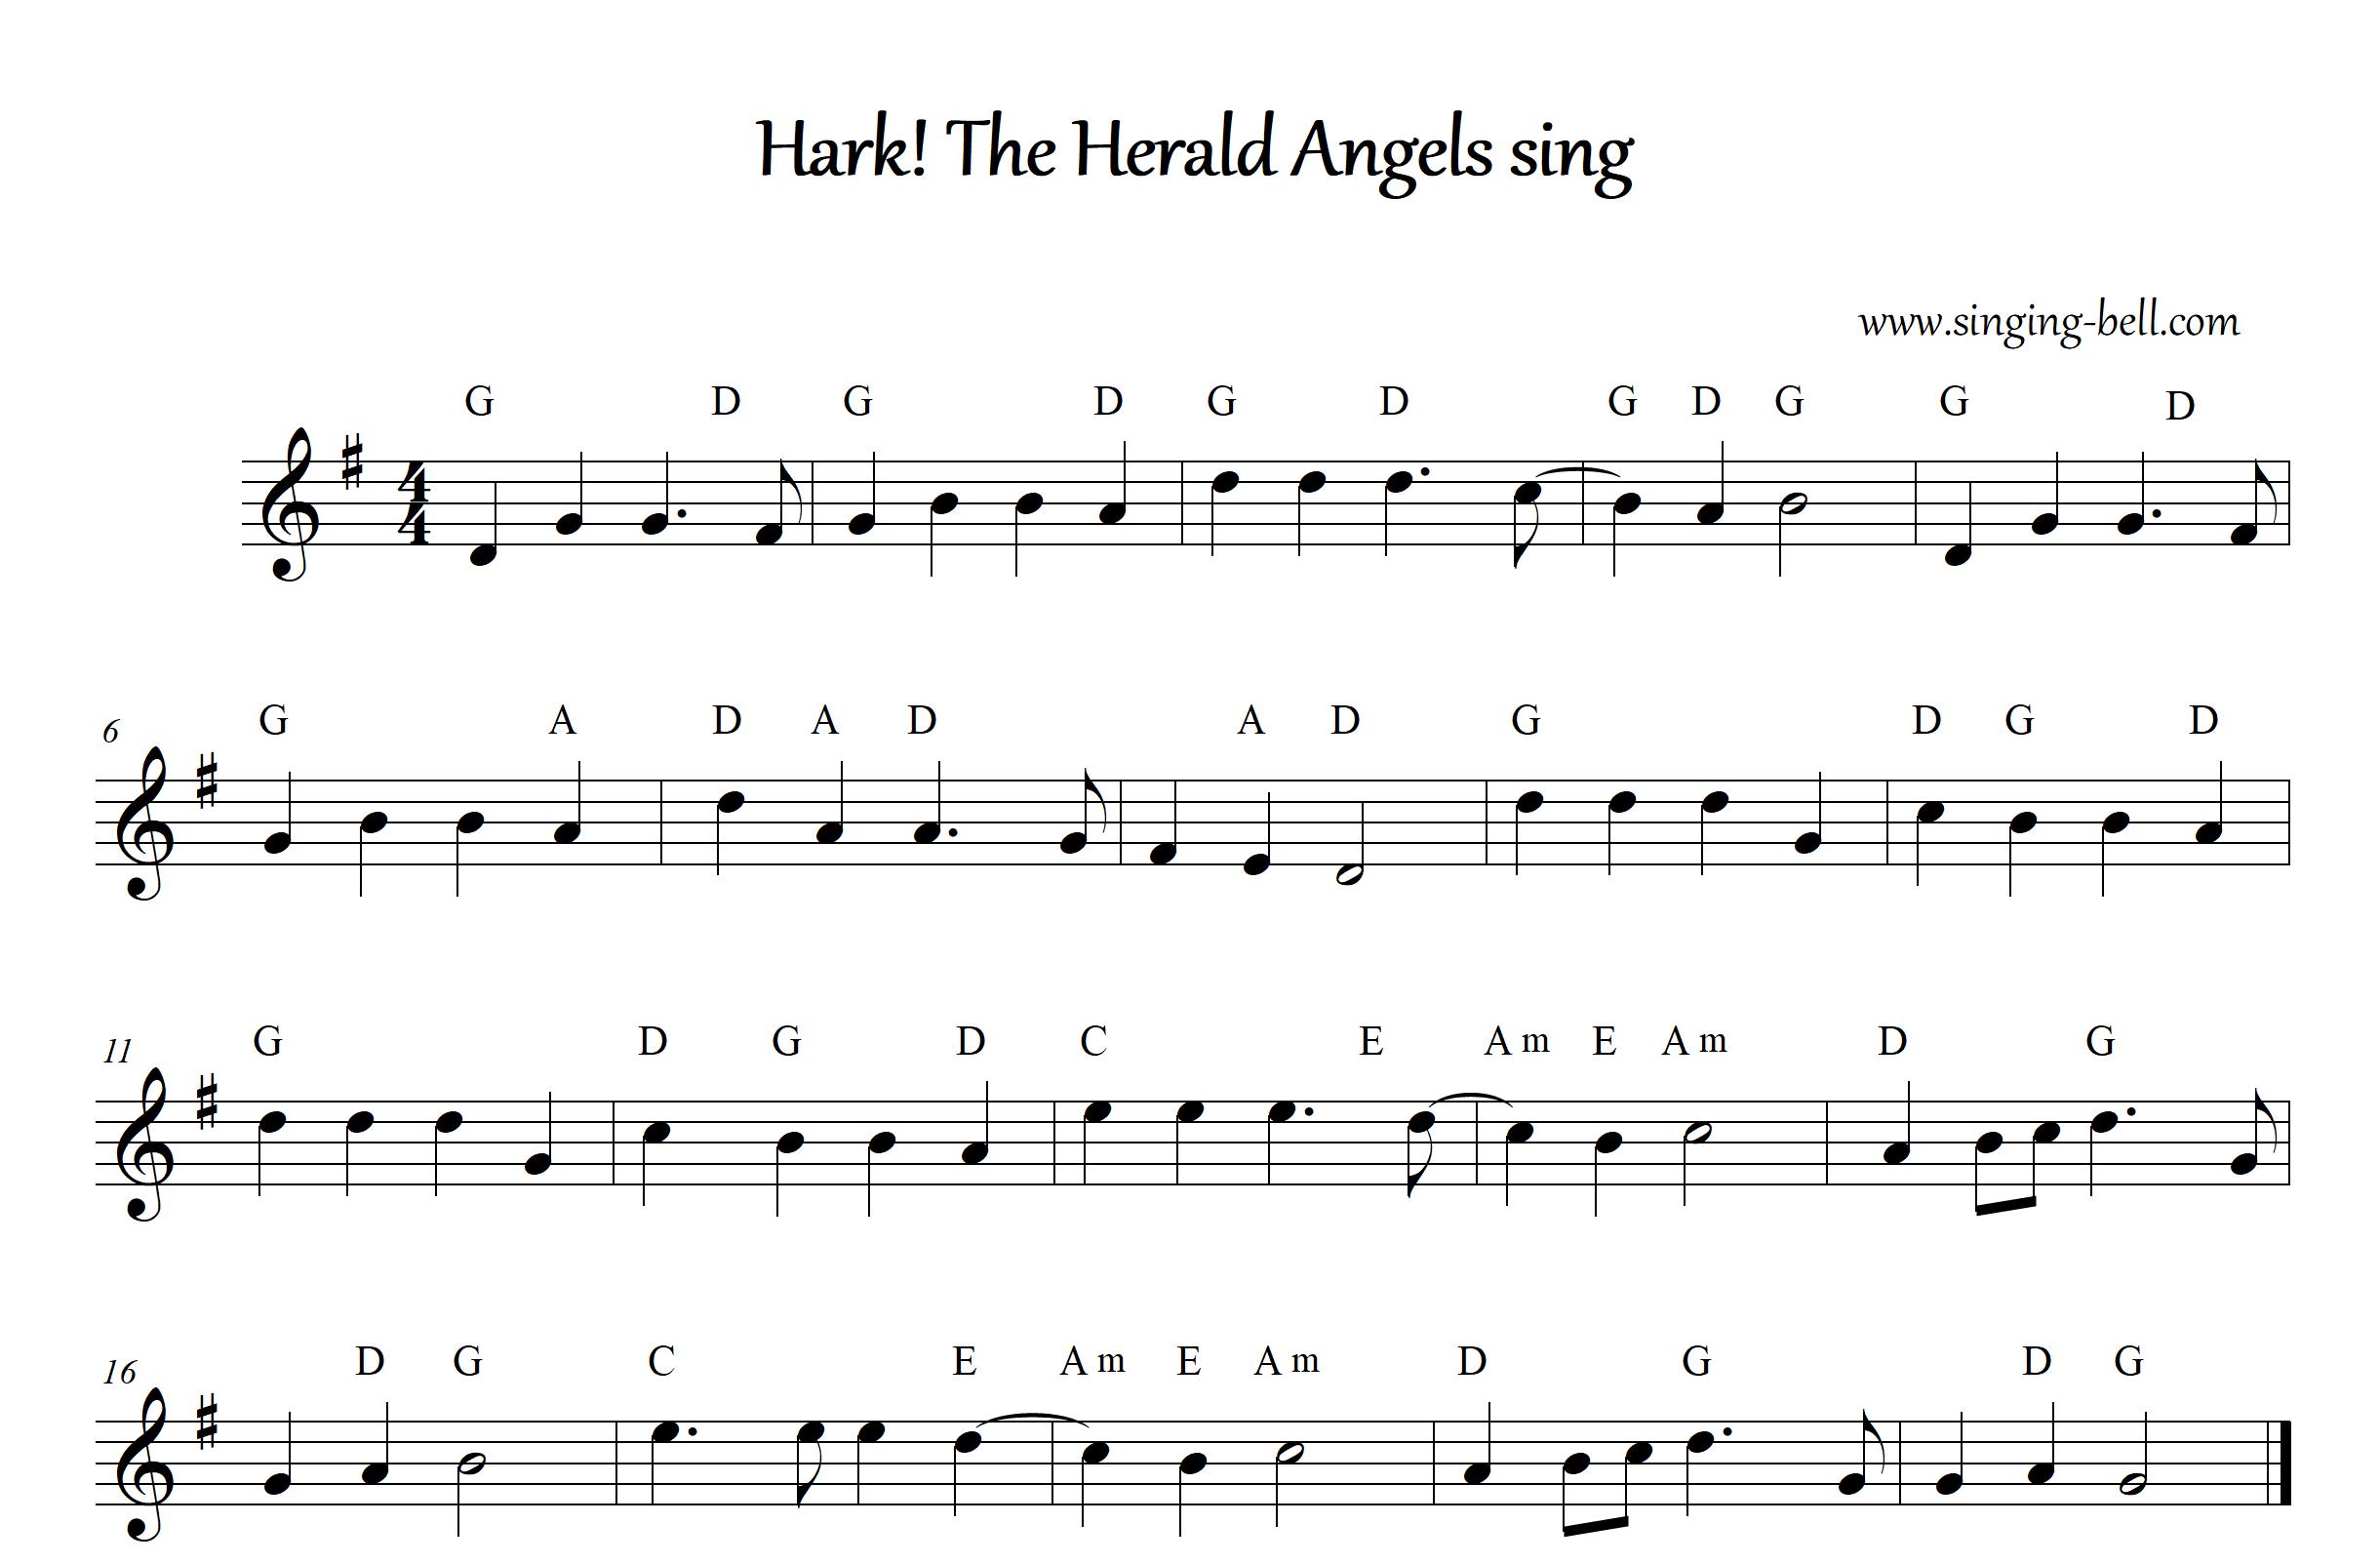 Hark the herald angels sing out loud lyrics